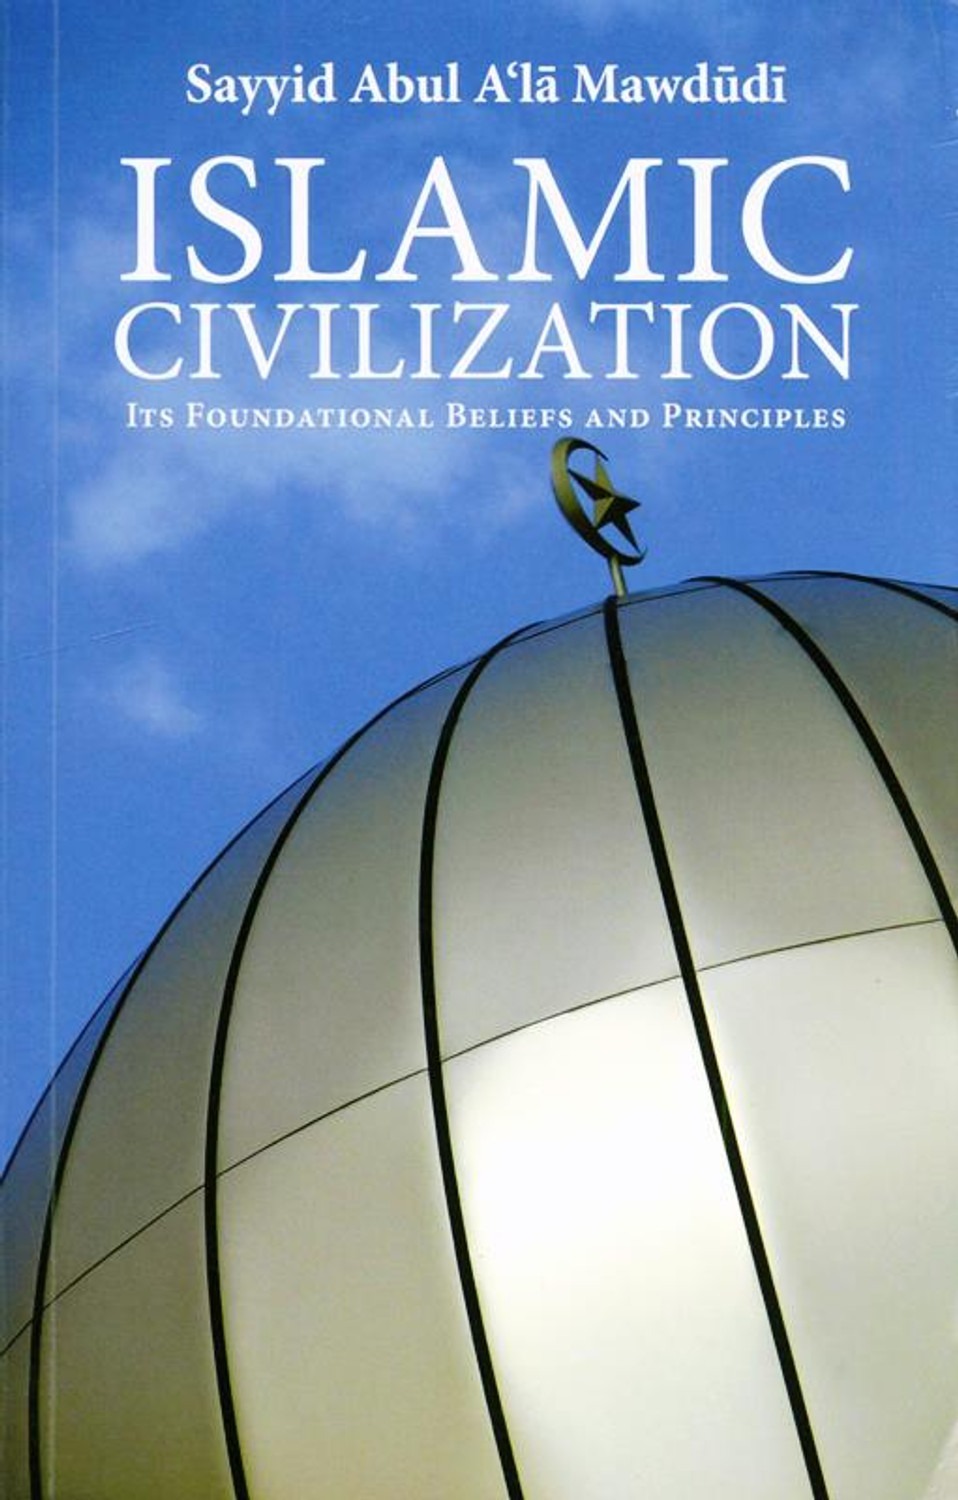 CG5-4 Islamic Civilization: Its Foundational Beliefs and Principles by Sayed Abdul Ala Maududi